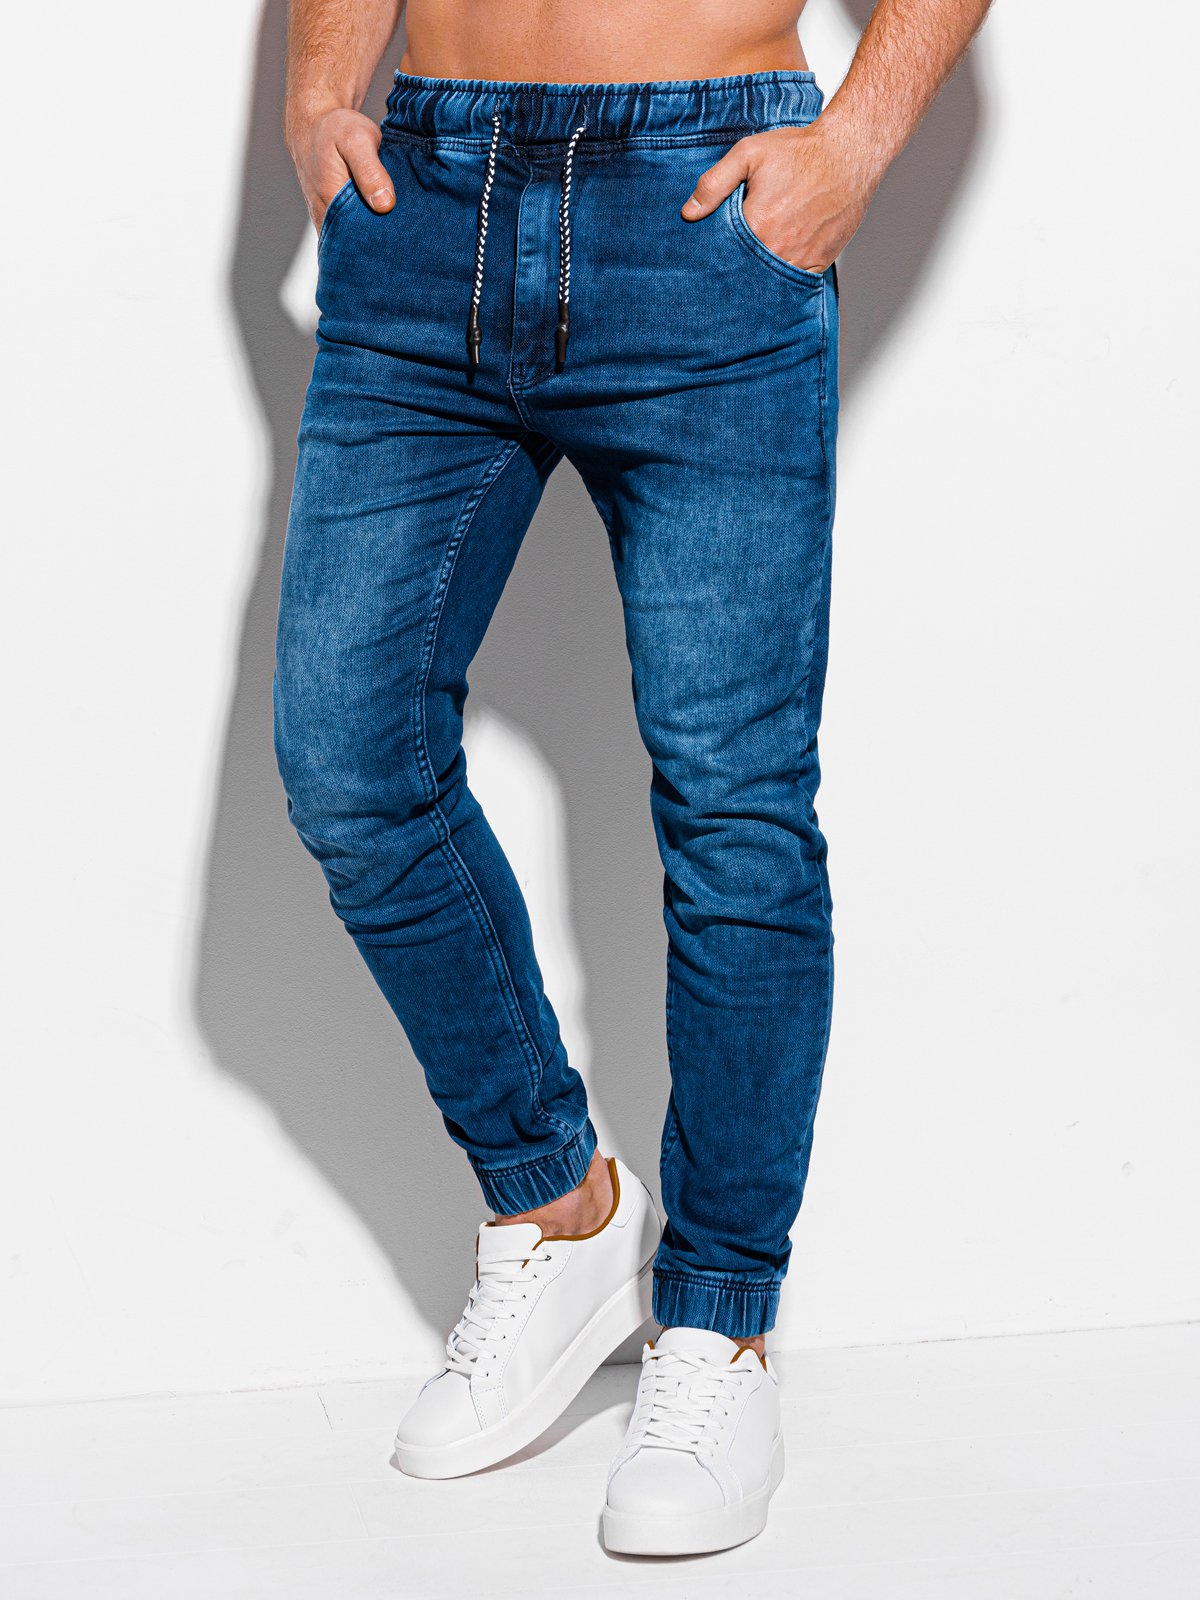 Mens Jeans Joggers P868 Dark Blue Modone Wholesale Clothing For Men